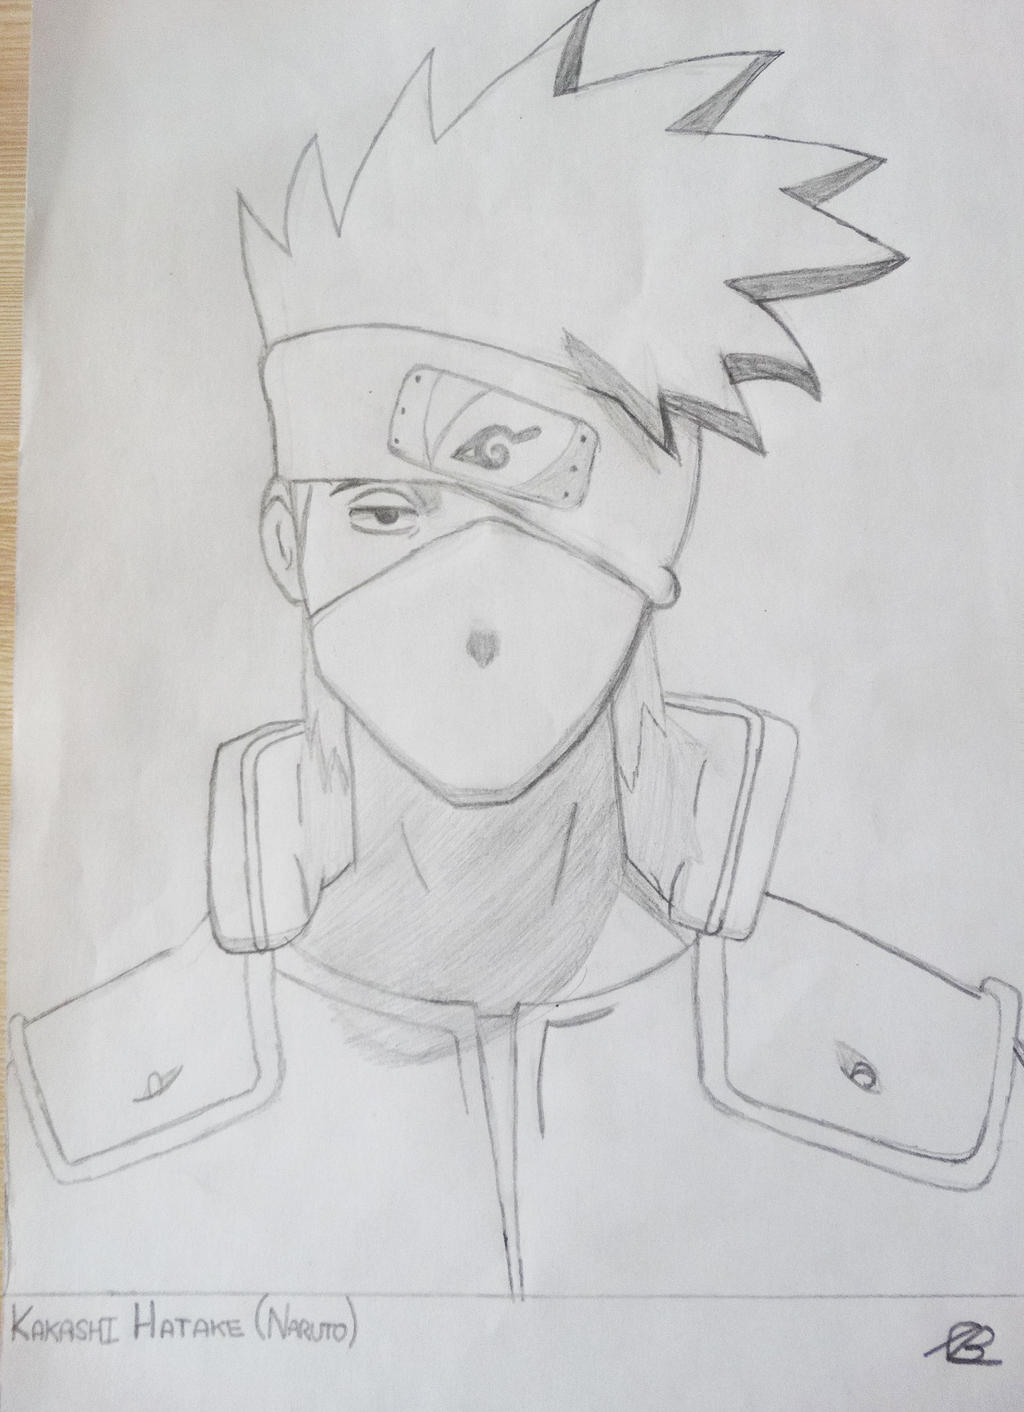 How to draw Kakashi Hatake from Naruto anime - Sketchok easy